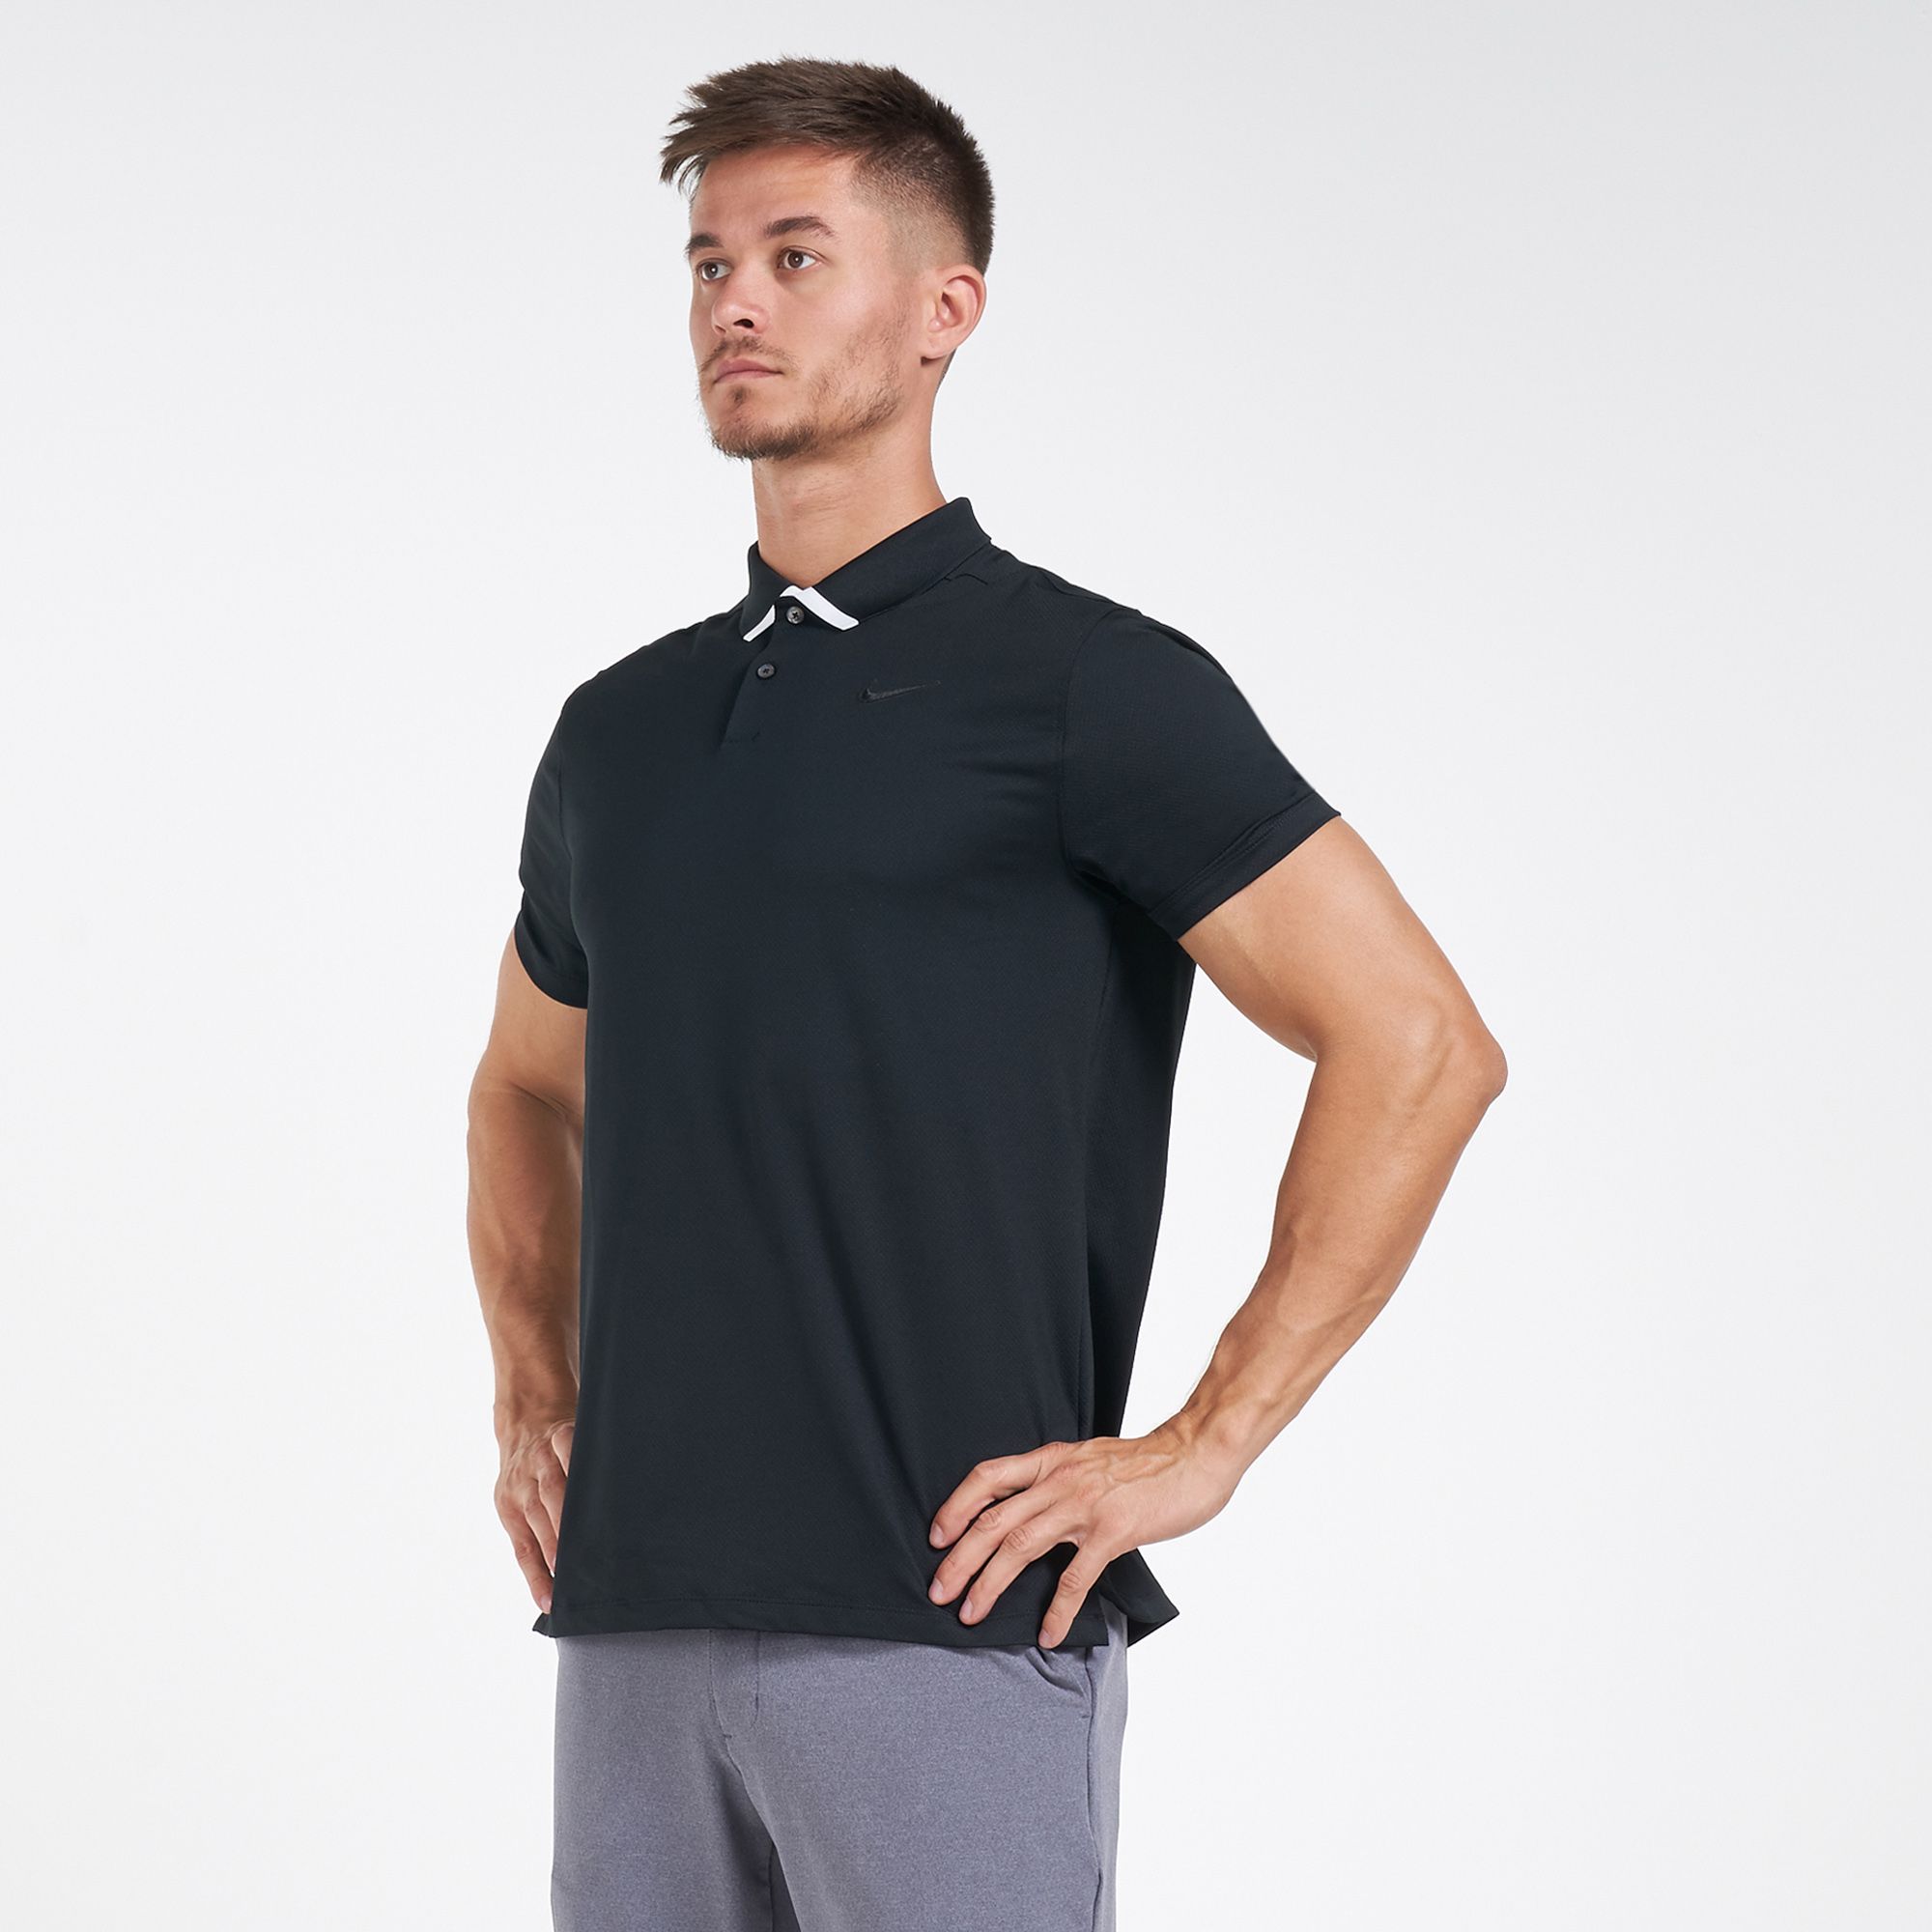 Nike Golf Men's Dri-FIT Vapor Solid Polo T-Shirt | Polo Shirts | Tops | Clothing | Men's Sale 